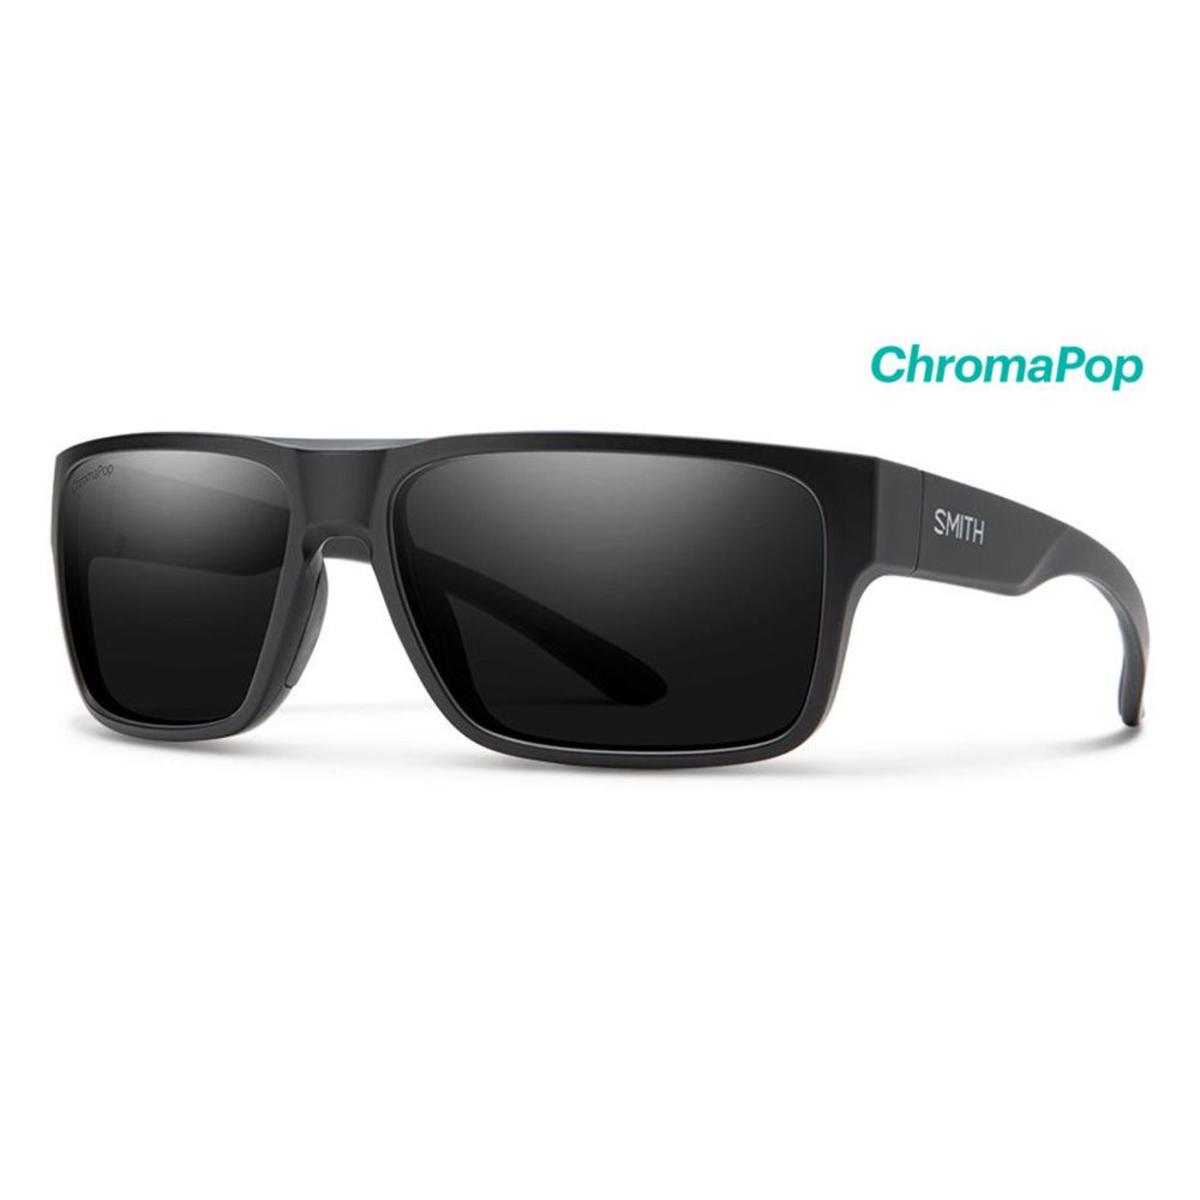 Smith Optics Soundtrack Sunglasses ChromaPop Polarized Black - Matte Black Frame